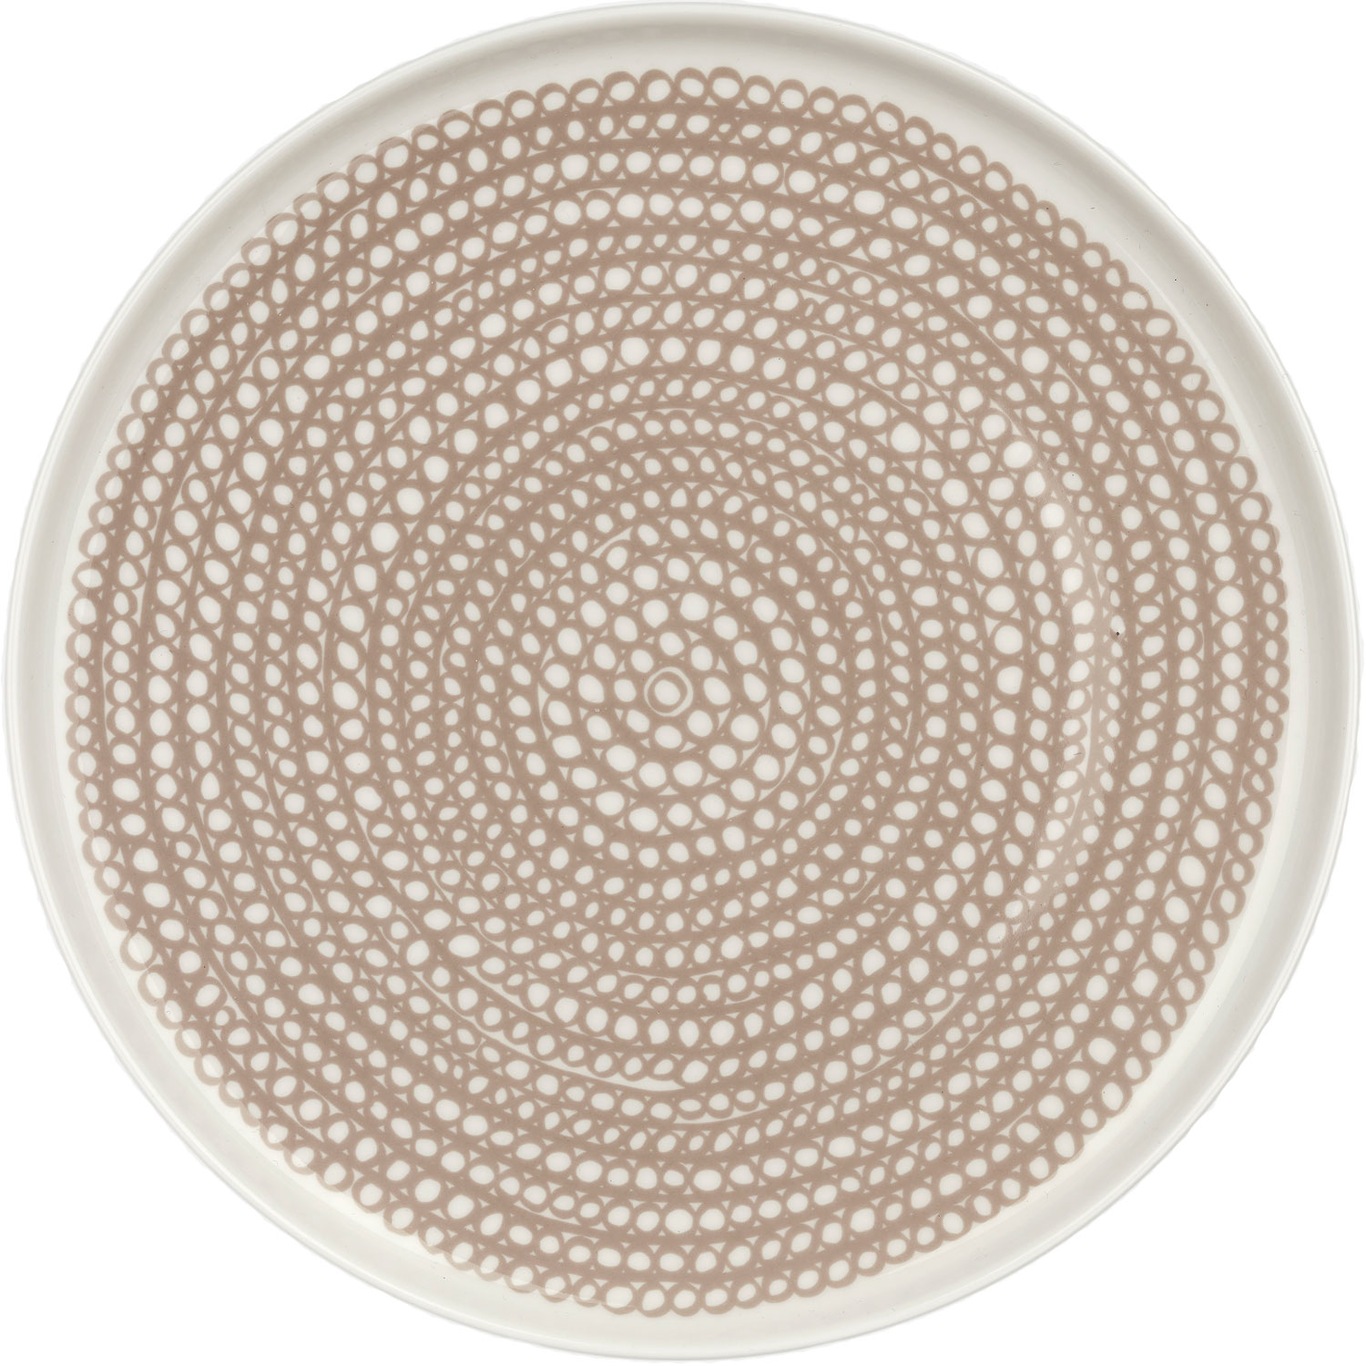 Oiva/Siirtolapuutarha Plate 20 cm, White / Clay